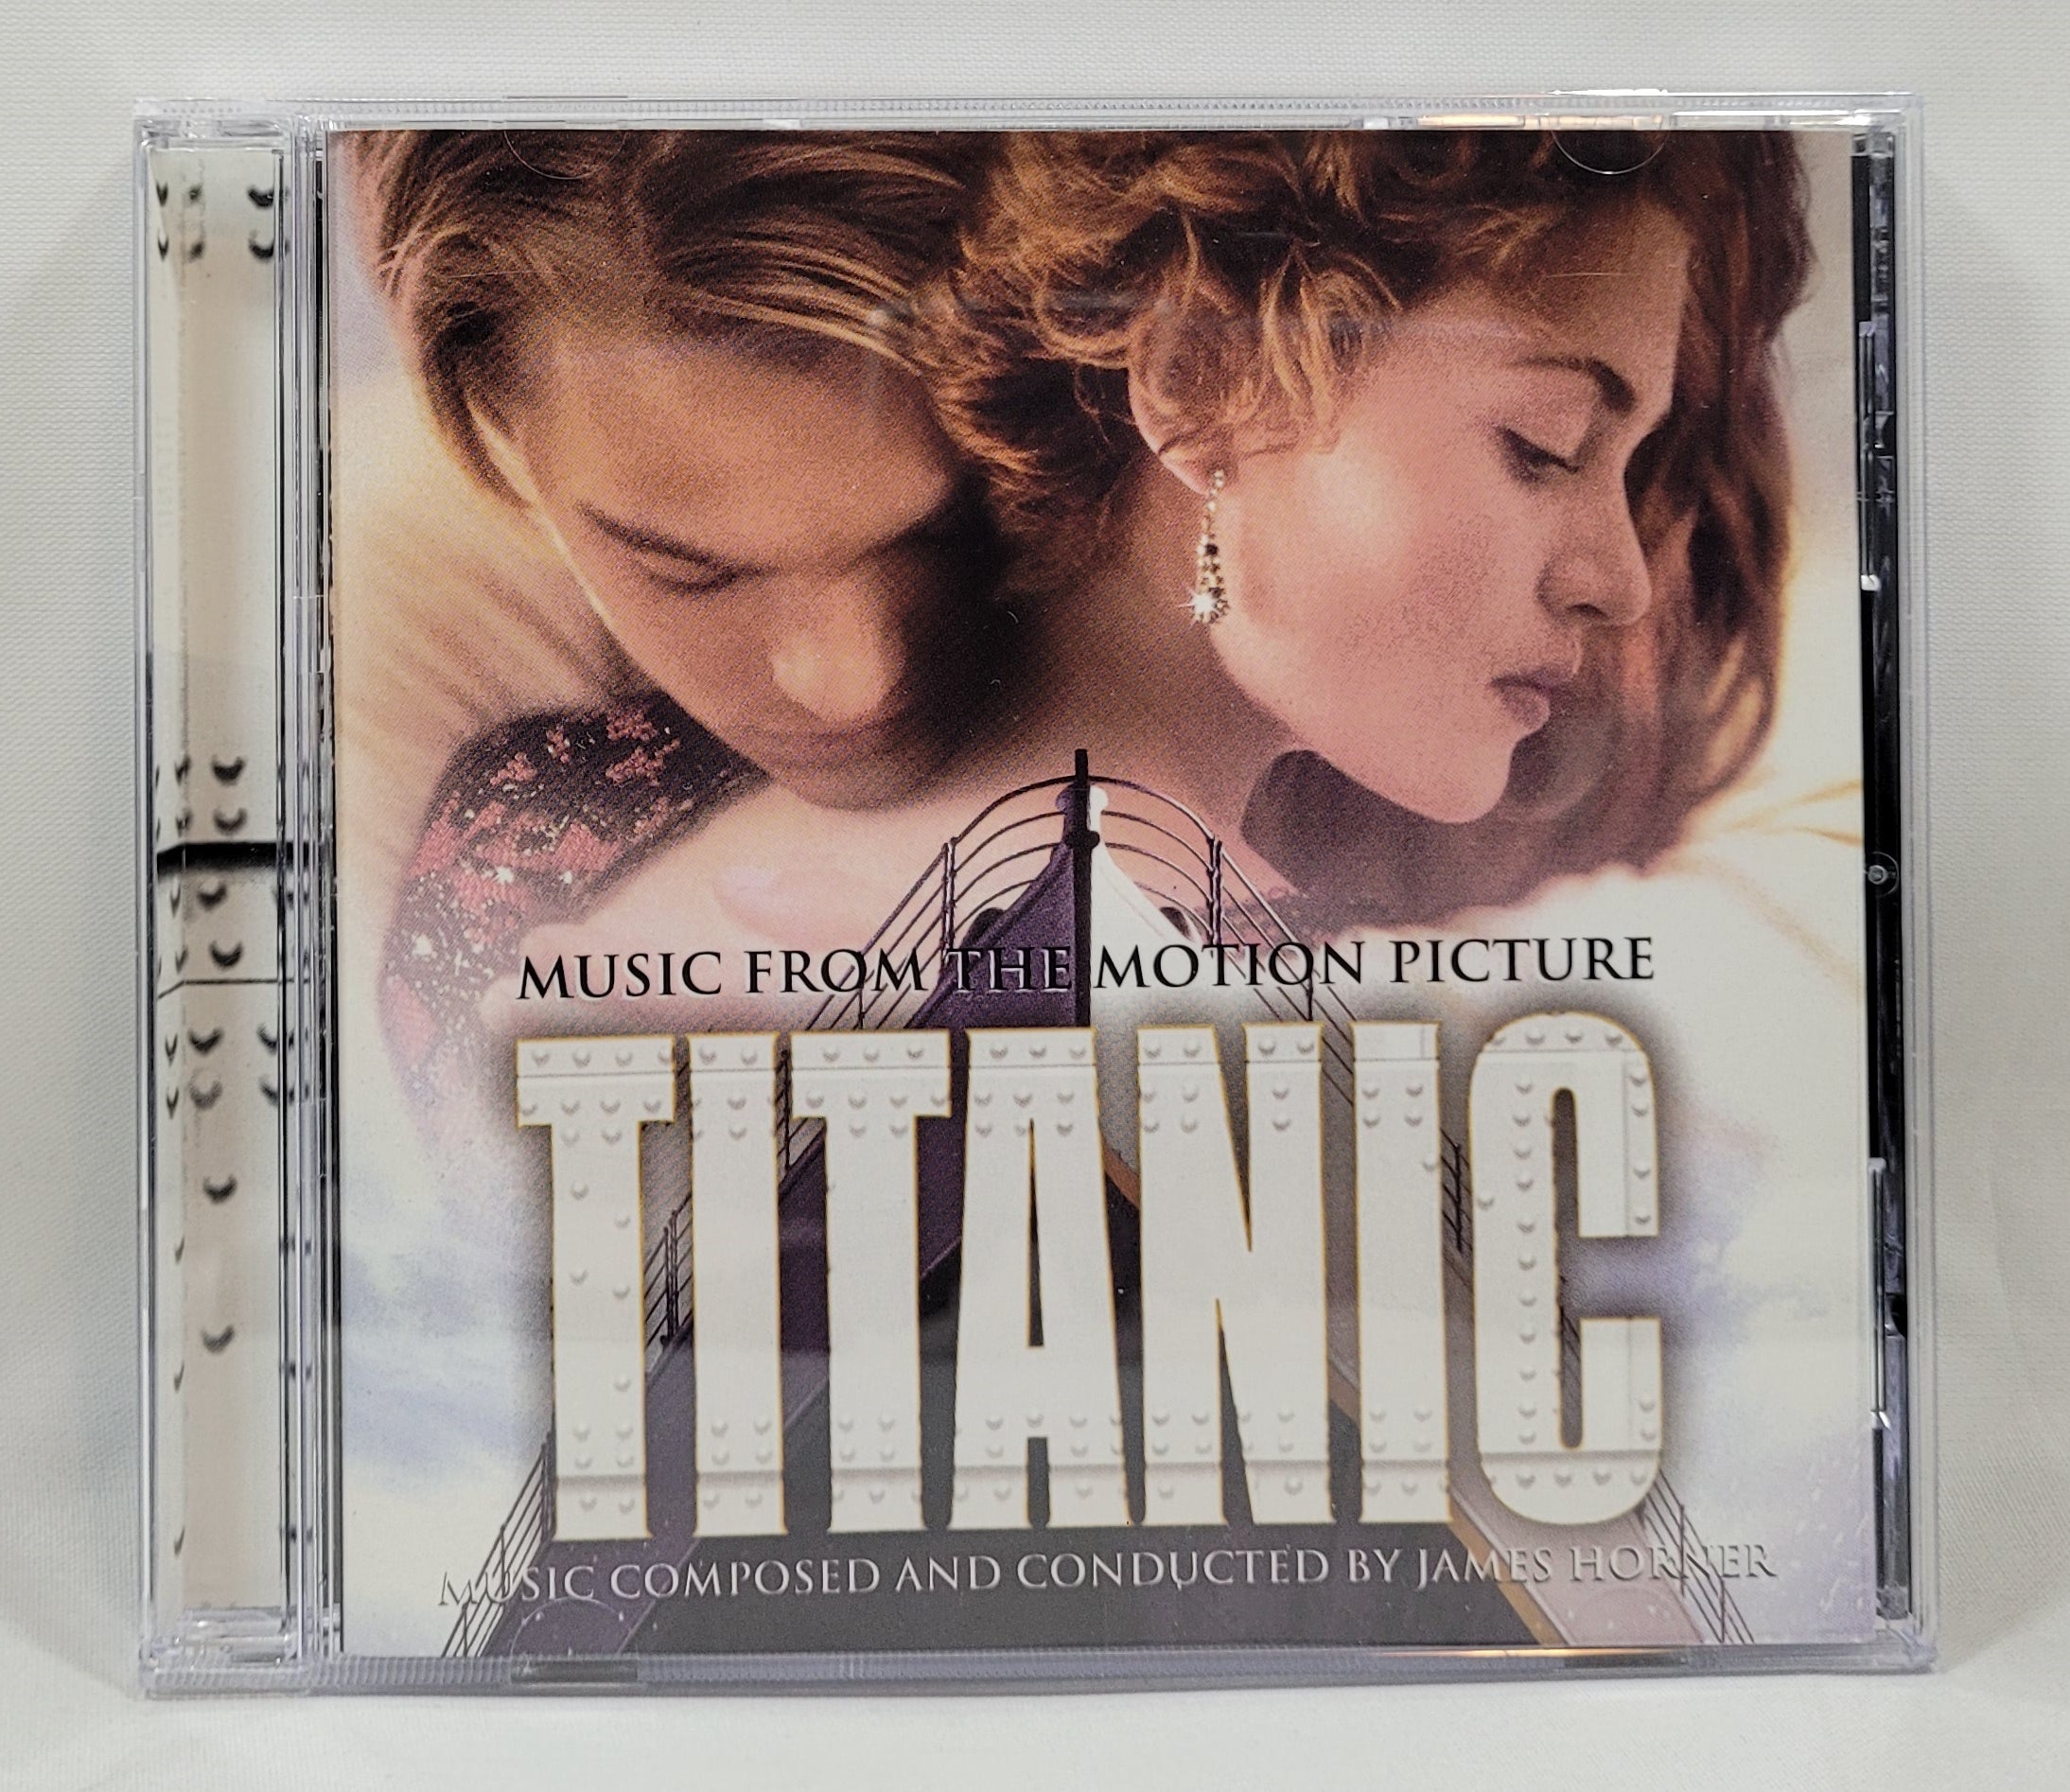 MC Titanic: albums, songs, playlists